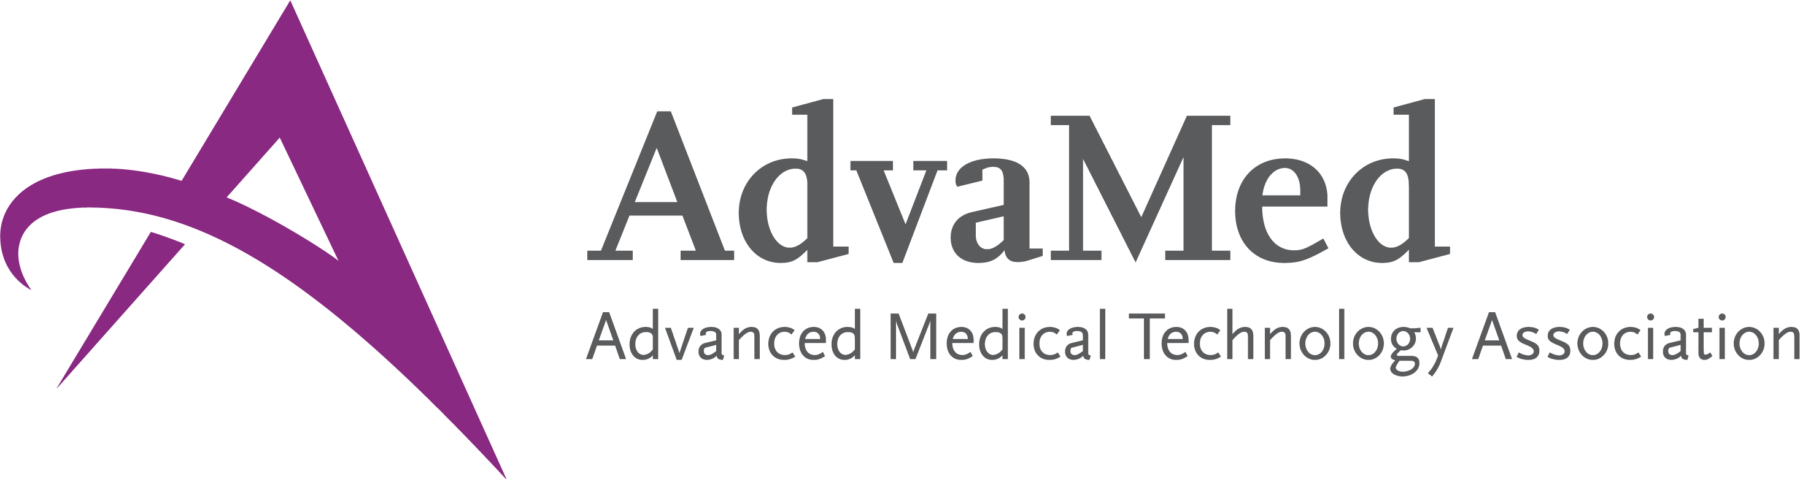 AdvaMed - Advanced Medical Technology Association